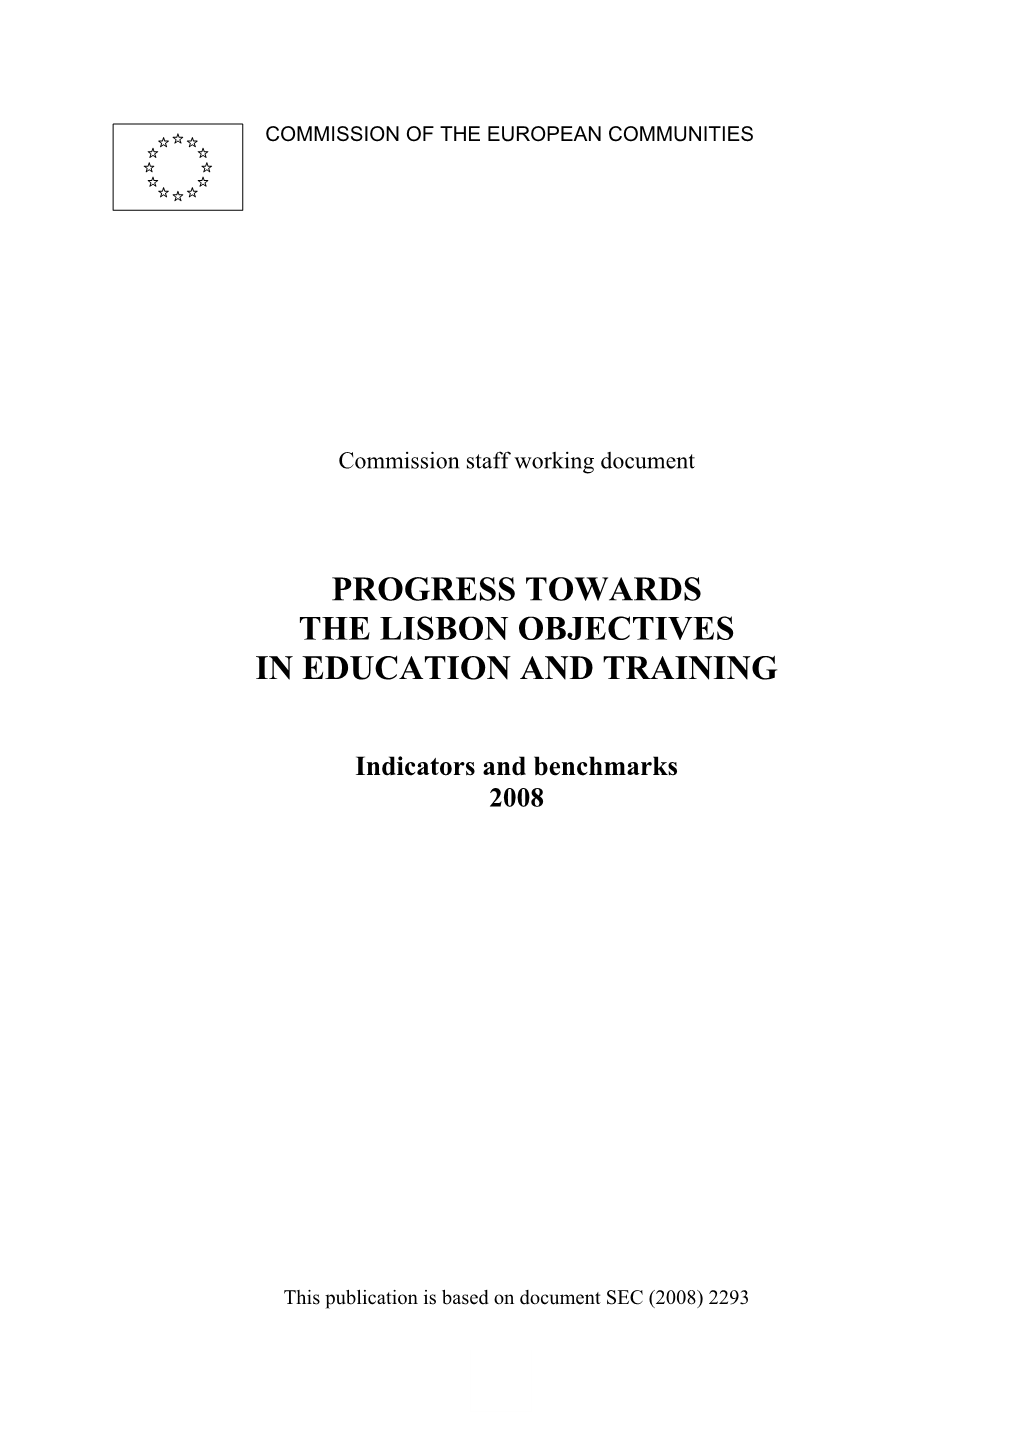 Progress Towards the Lisbon Objectives in Education and Training